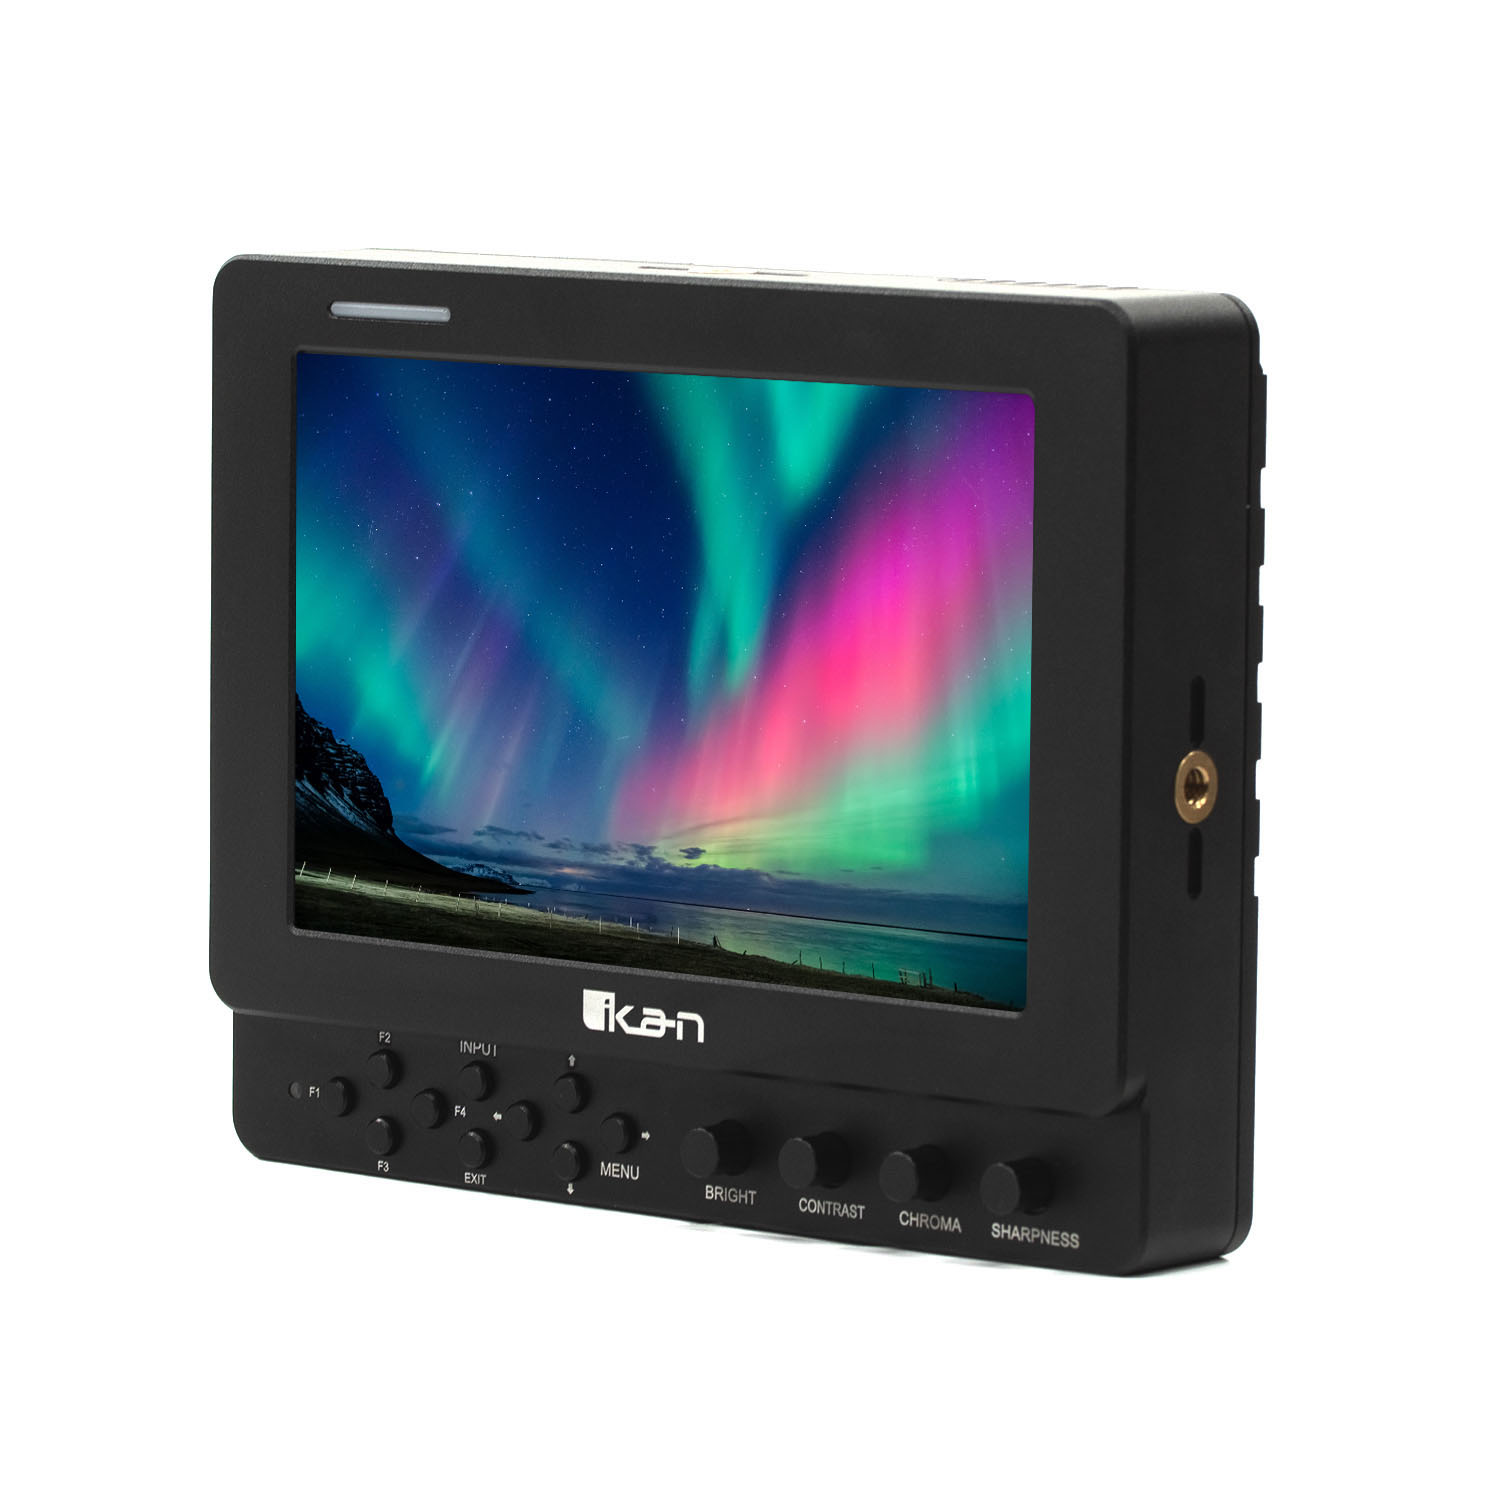 S7H-V2 Ikan Saga 7-Inch High Bright 4K HDMI/3G-SDI On-Camera Field Monitor with 3D LUTs Support 